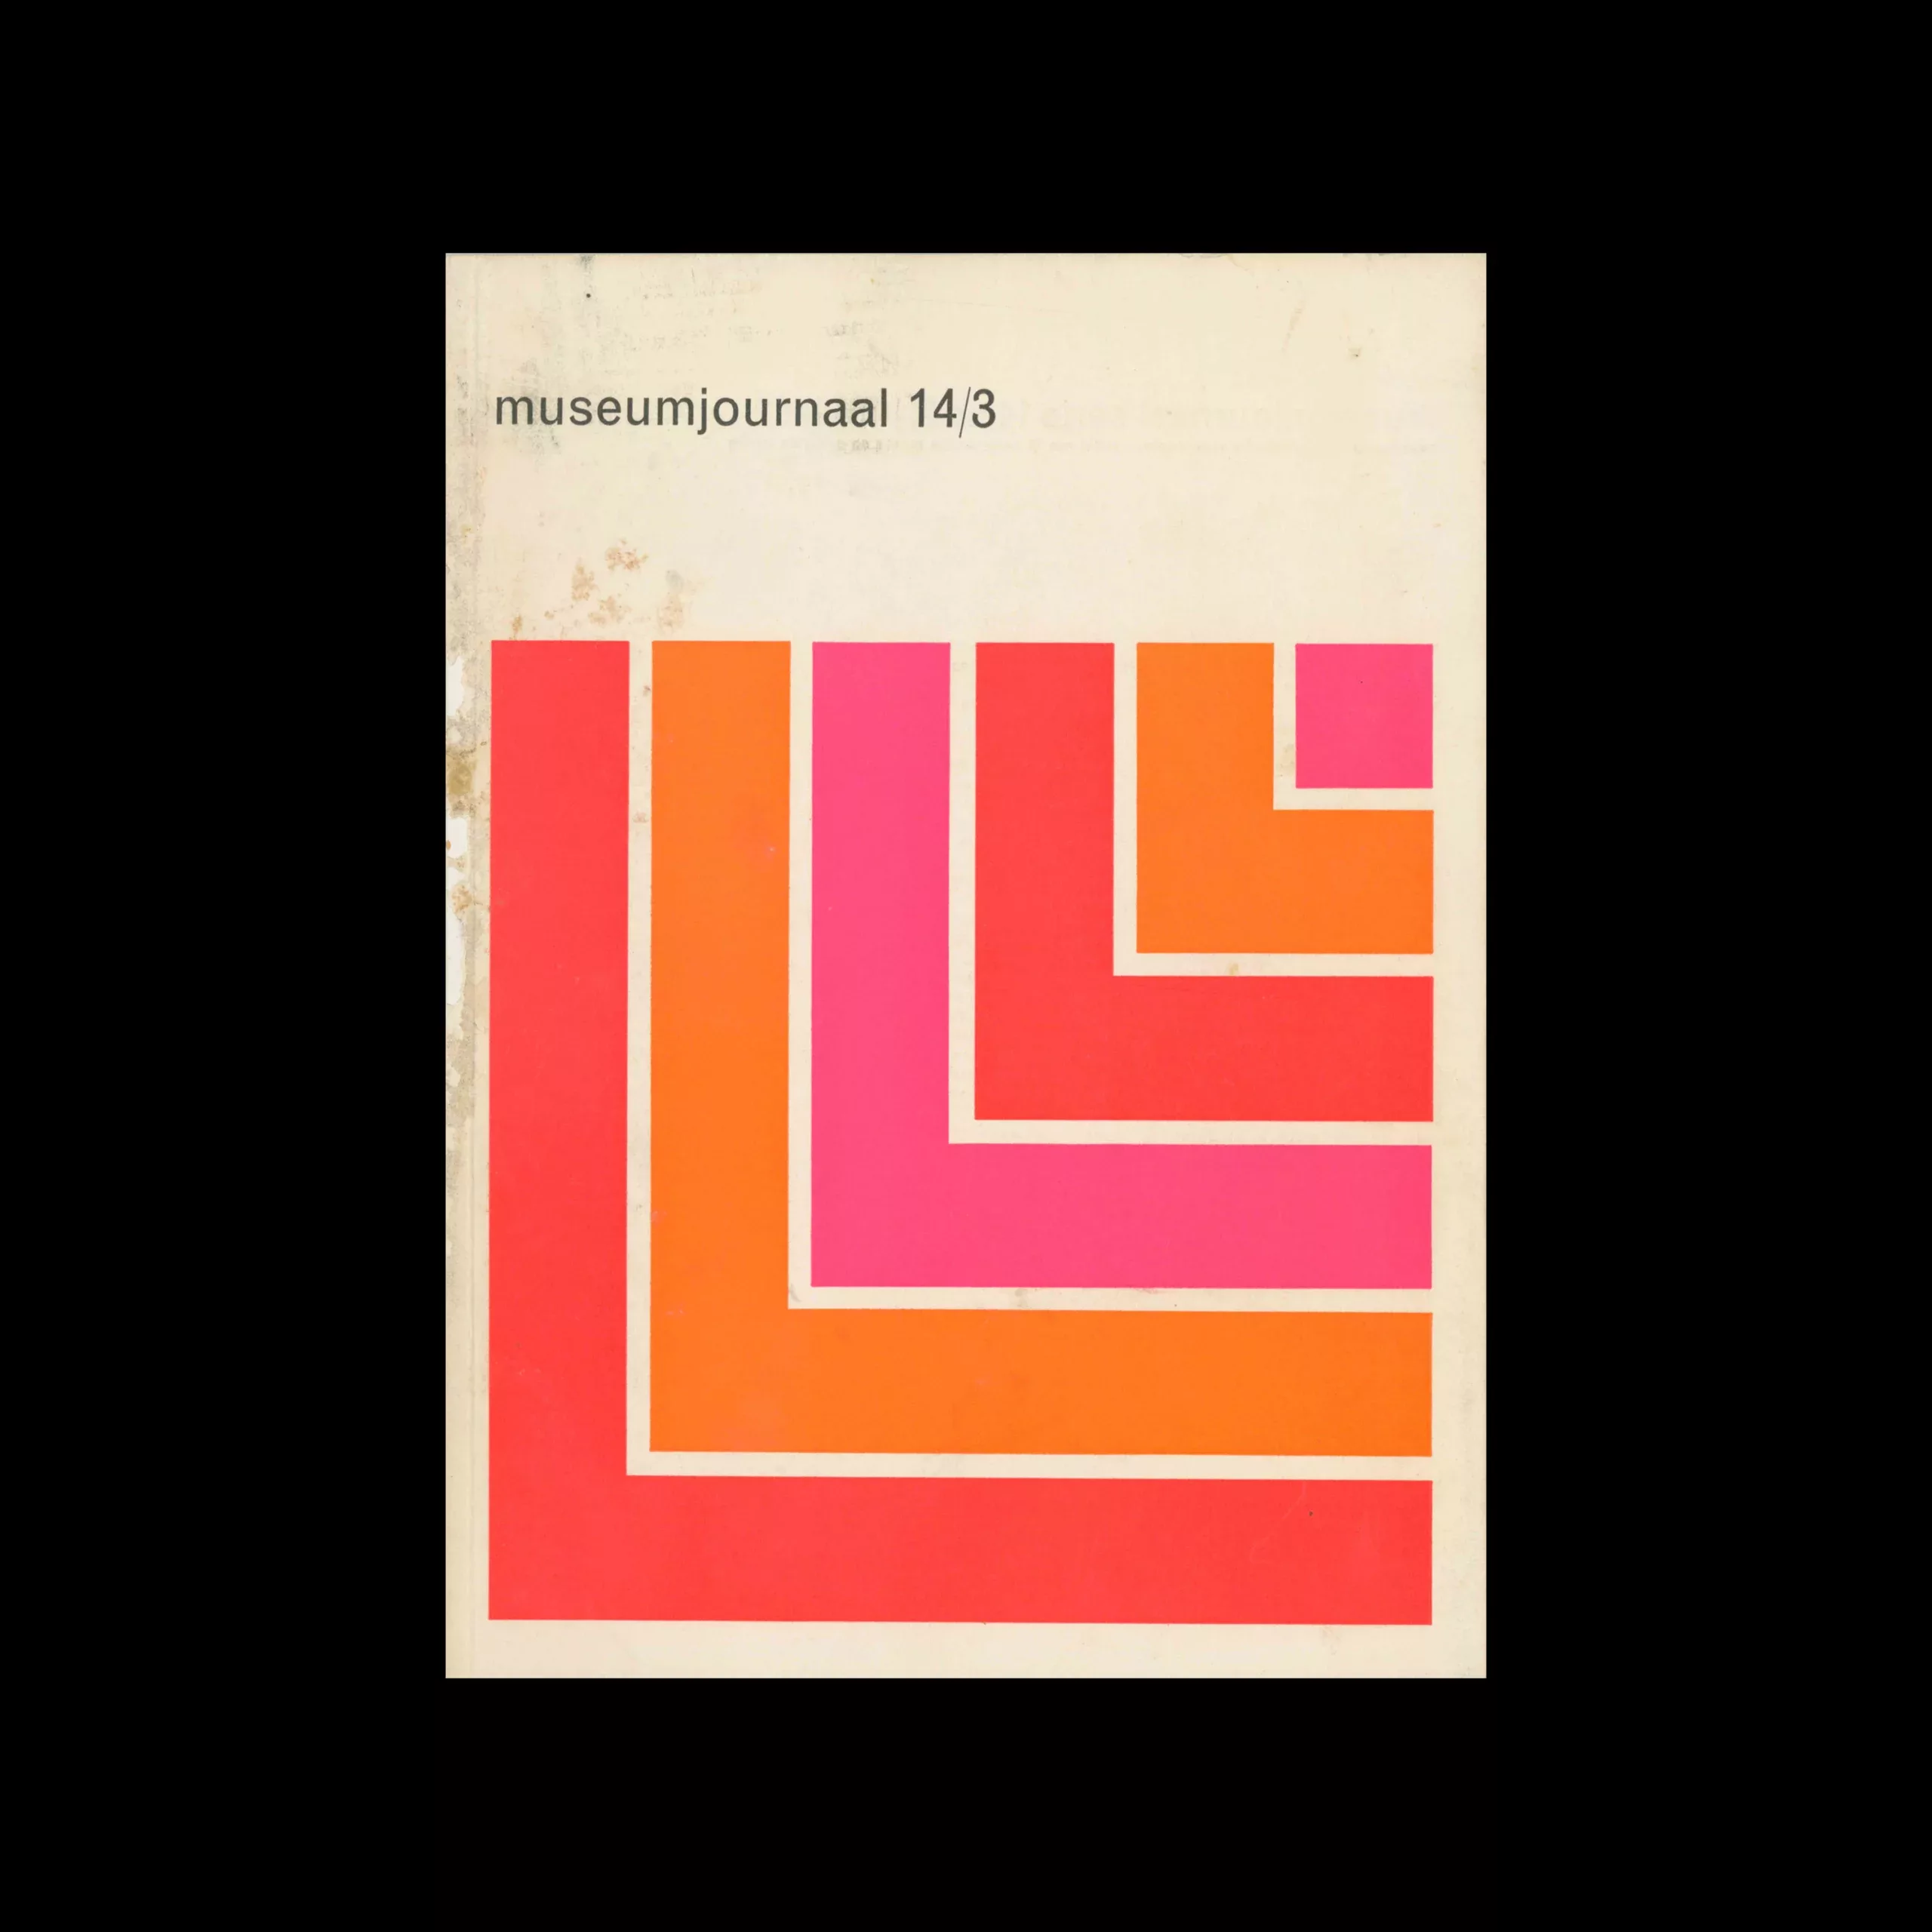 Museumjournaal, Serie 14 no 3, 1969. Design by Jurriaan Schrofer